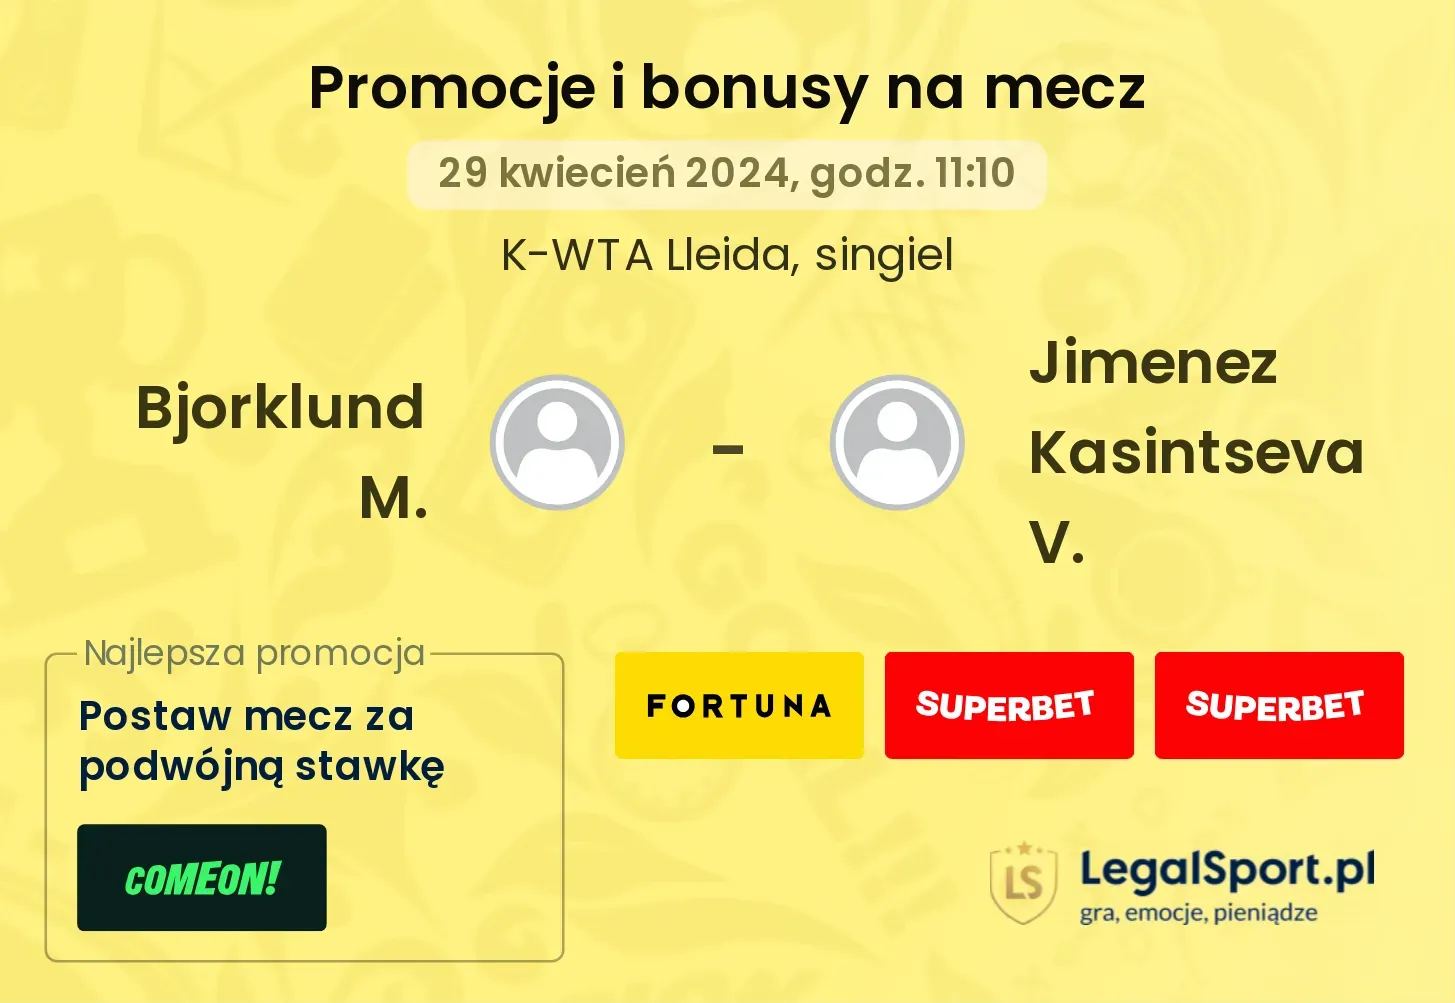 Bjorklund M. - Jimenez Kasintseva V. promocje bonusy na mecz